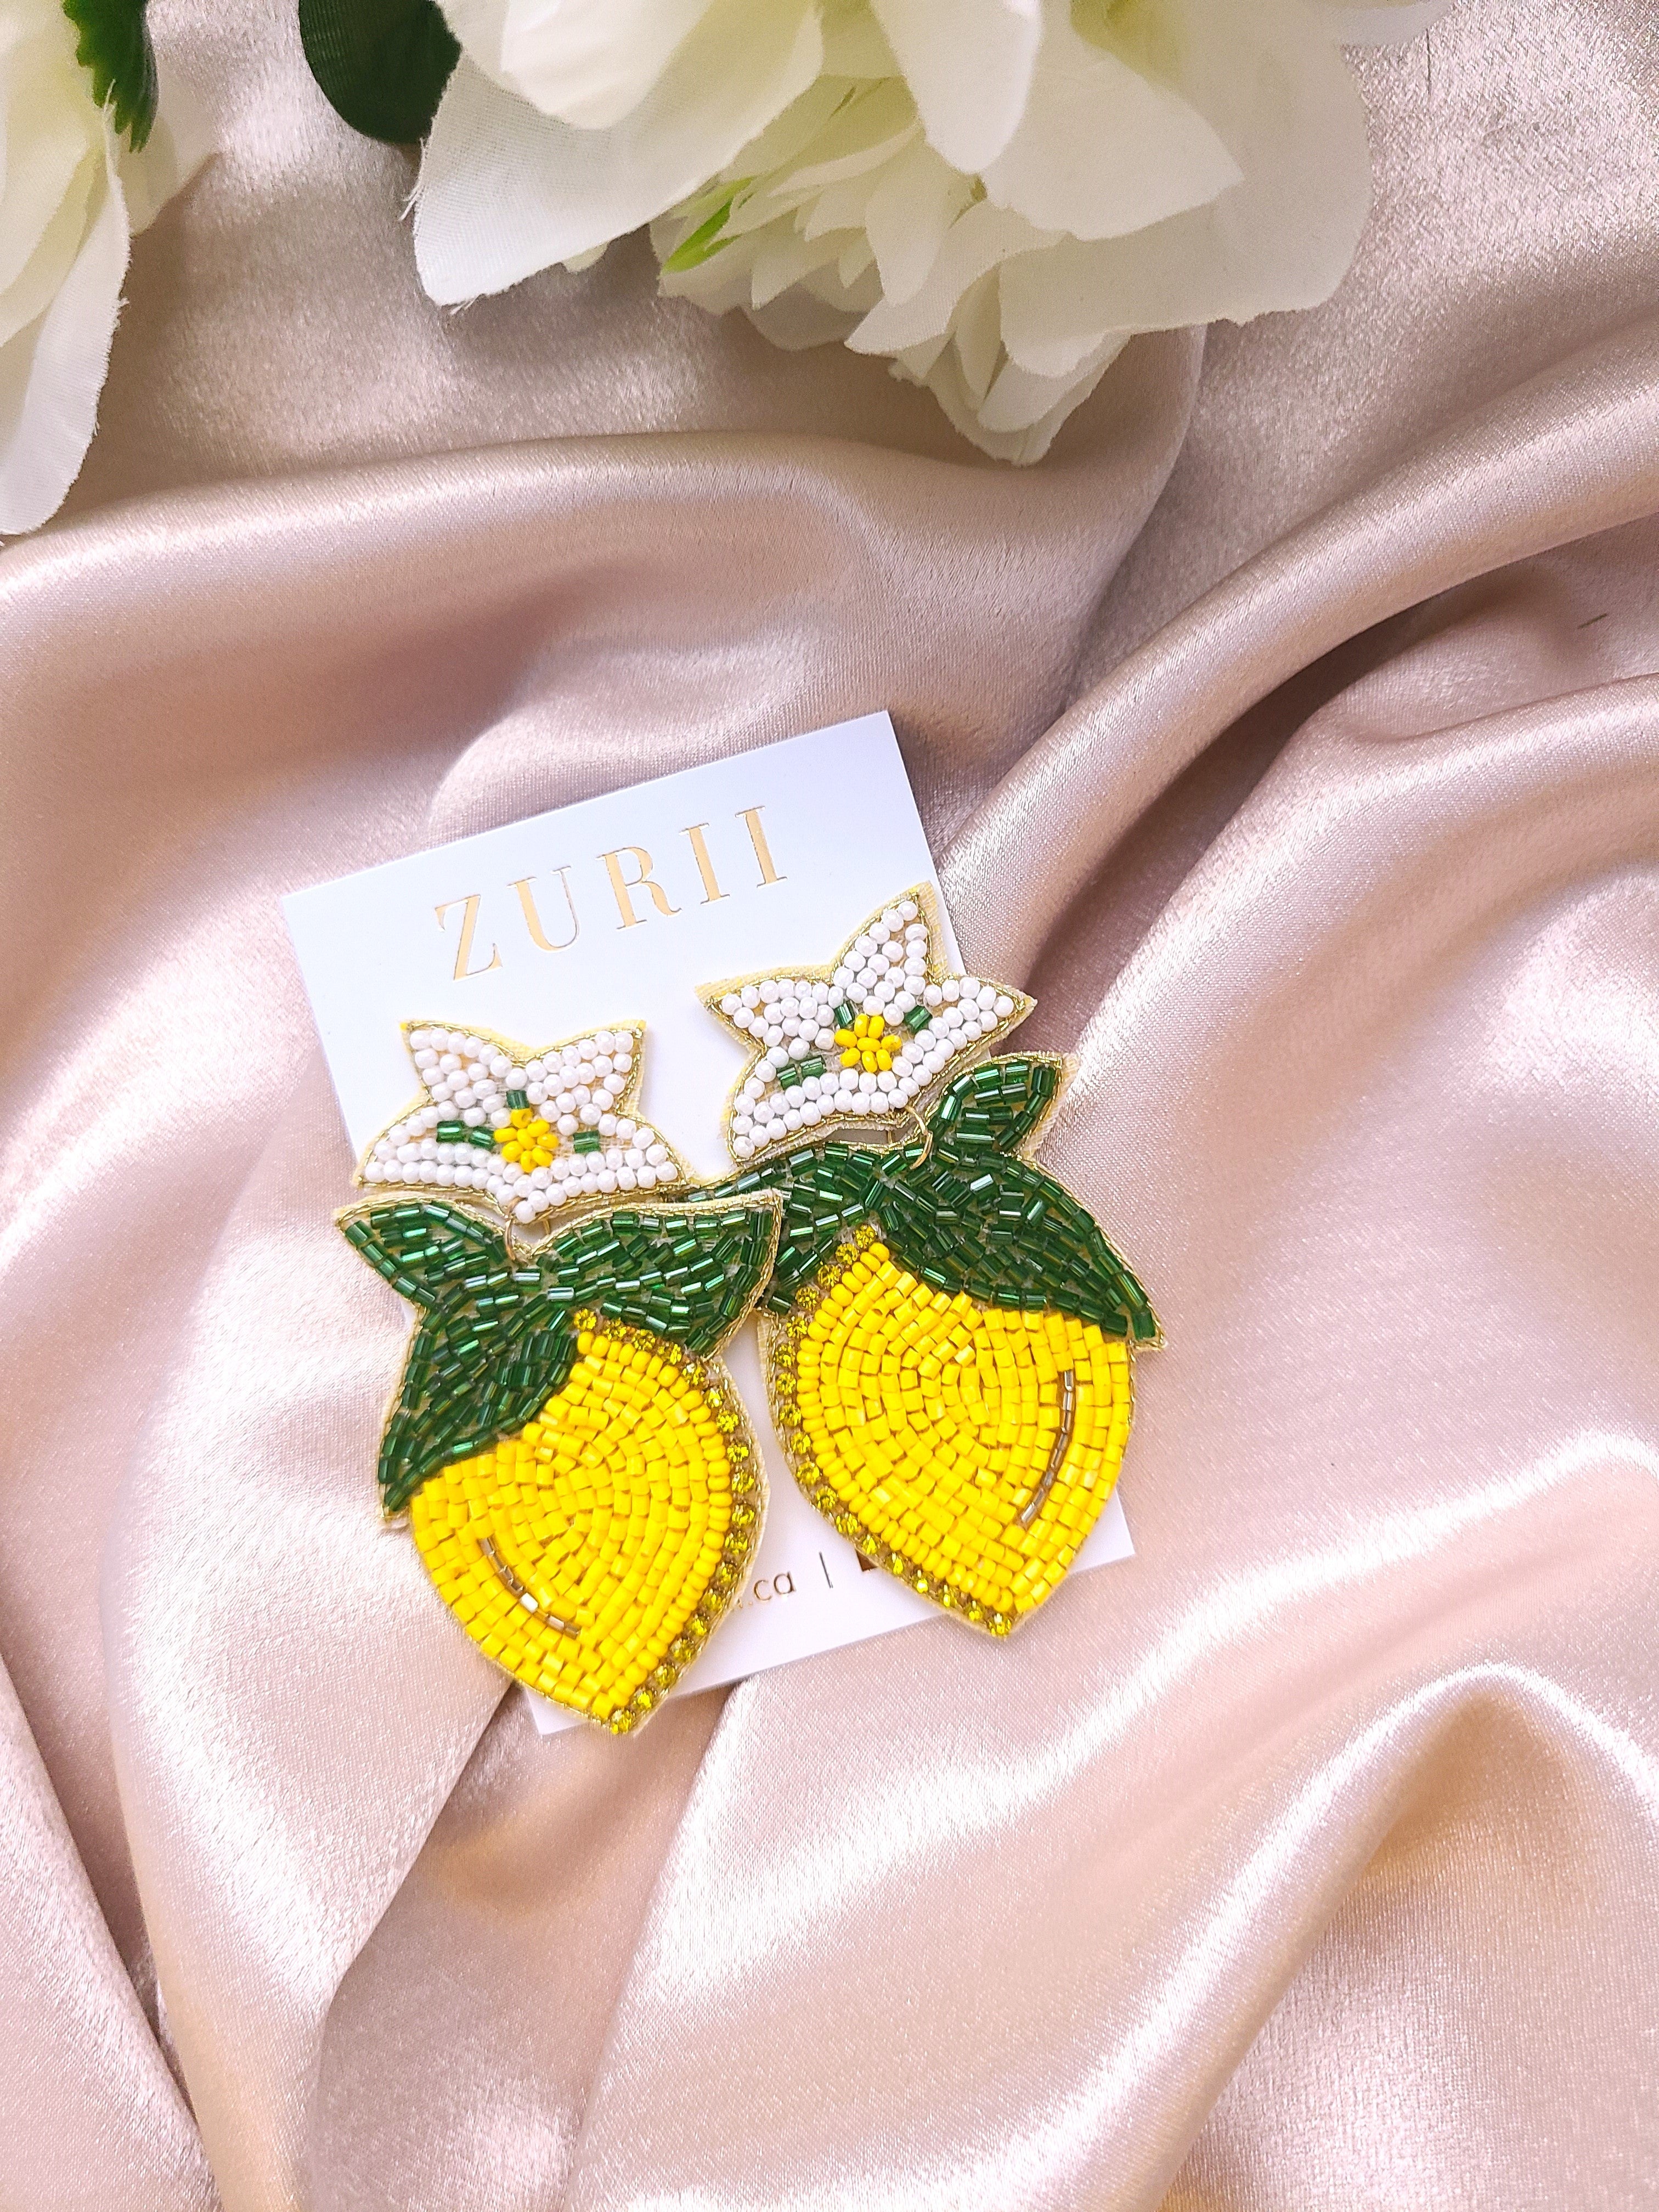 Lemon Earrings